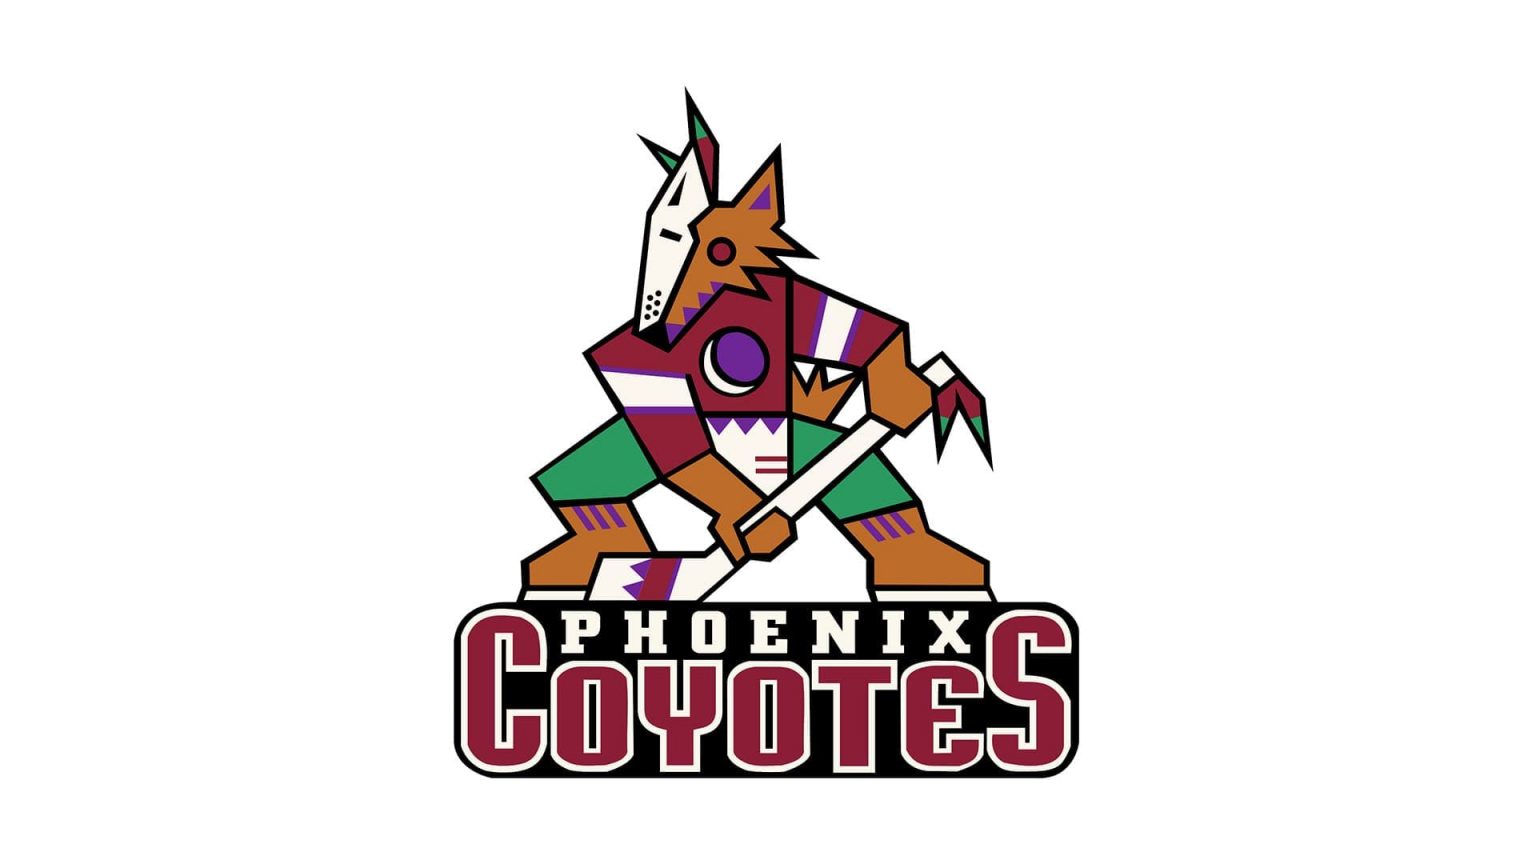 Arizona Coyotes image